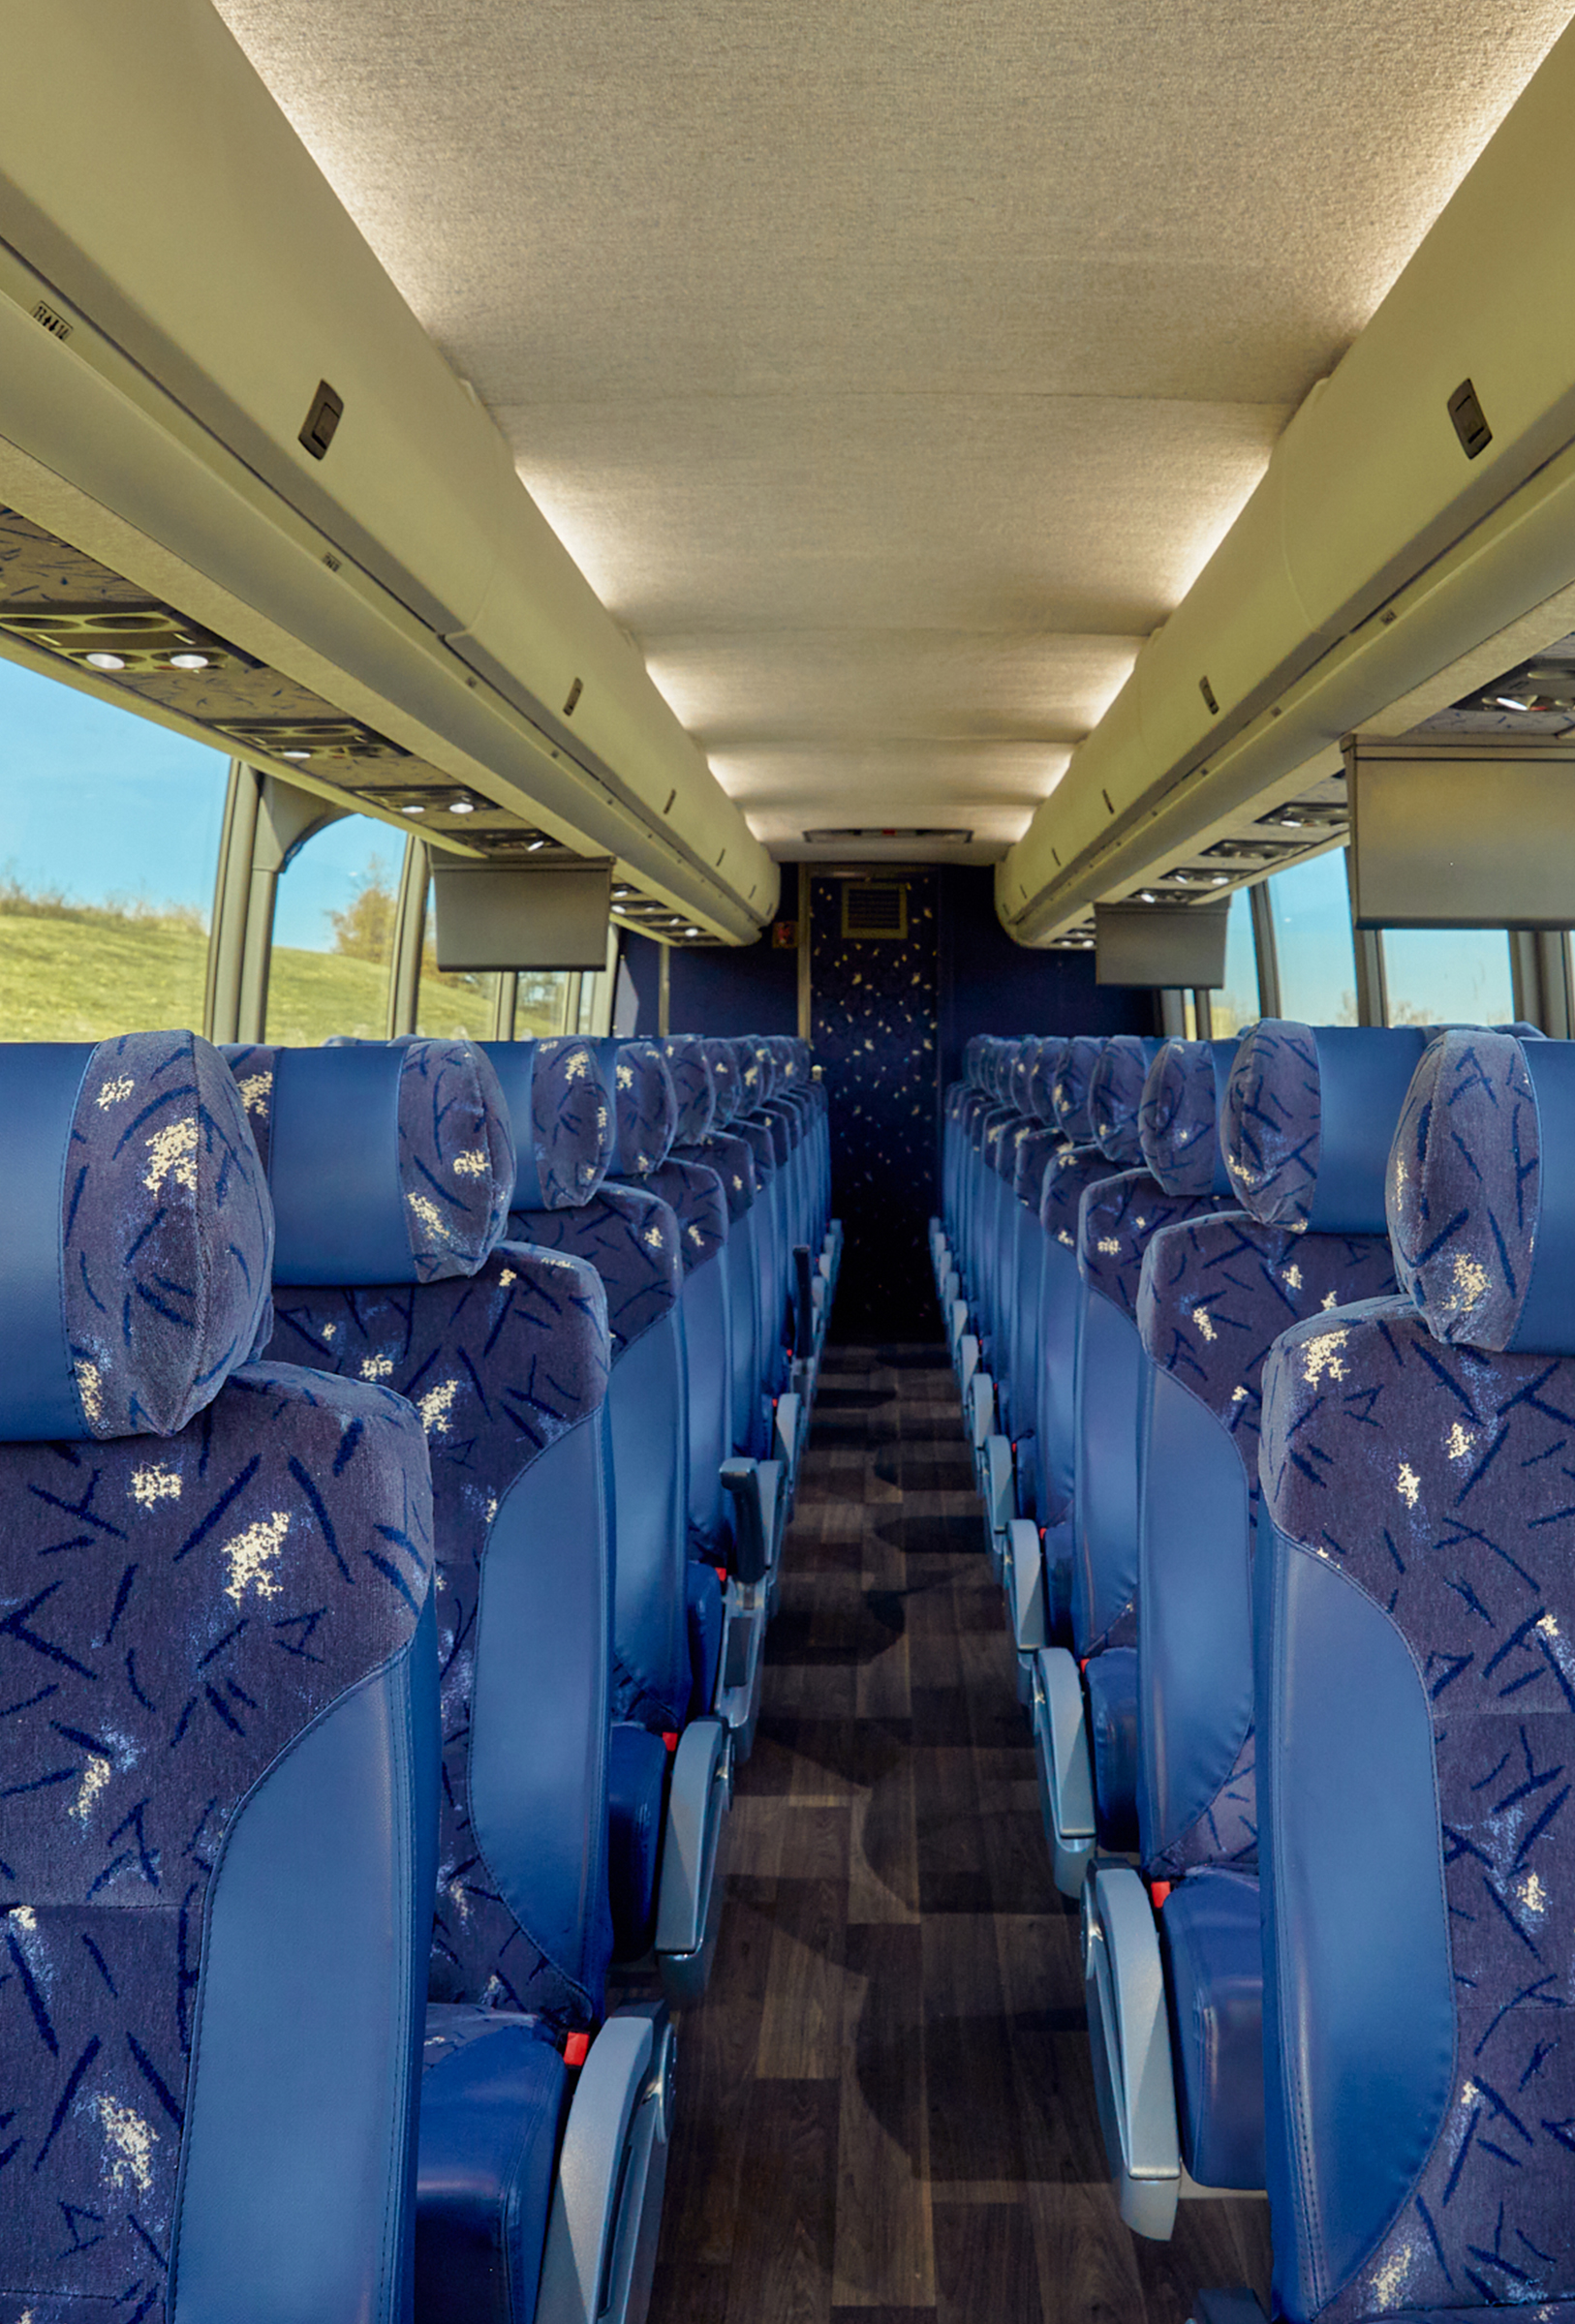 Passenger motorcoach charter bus seats and aisle